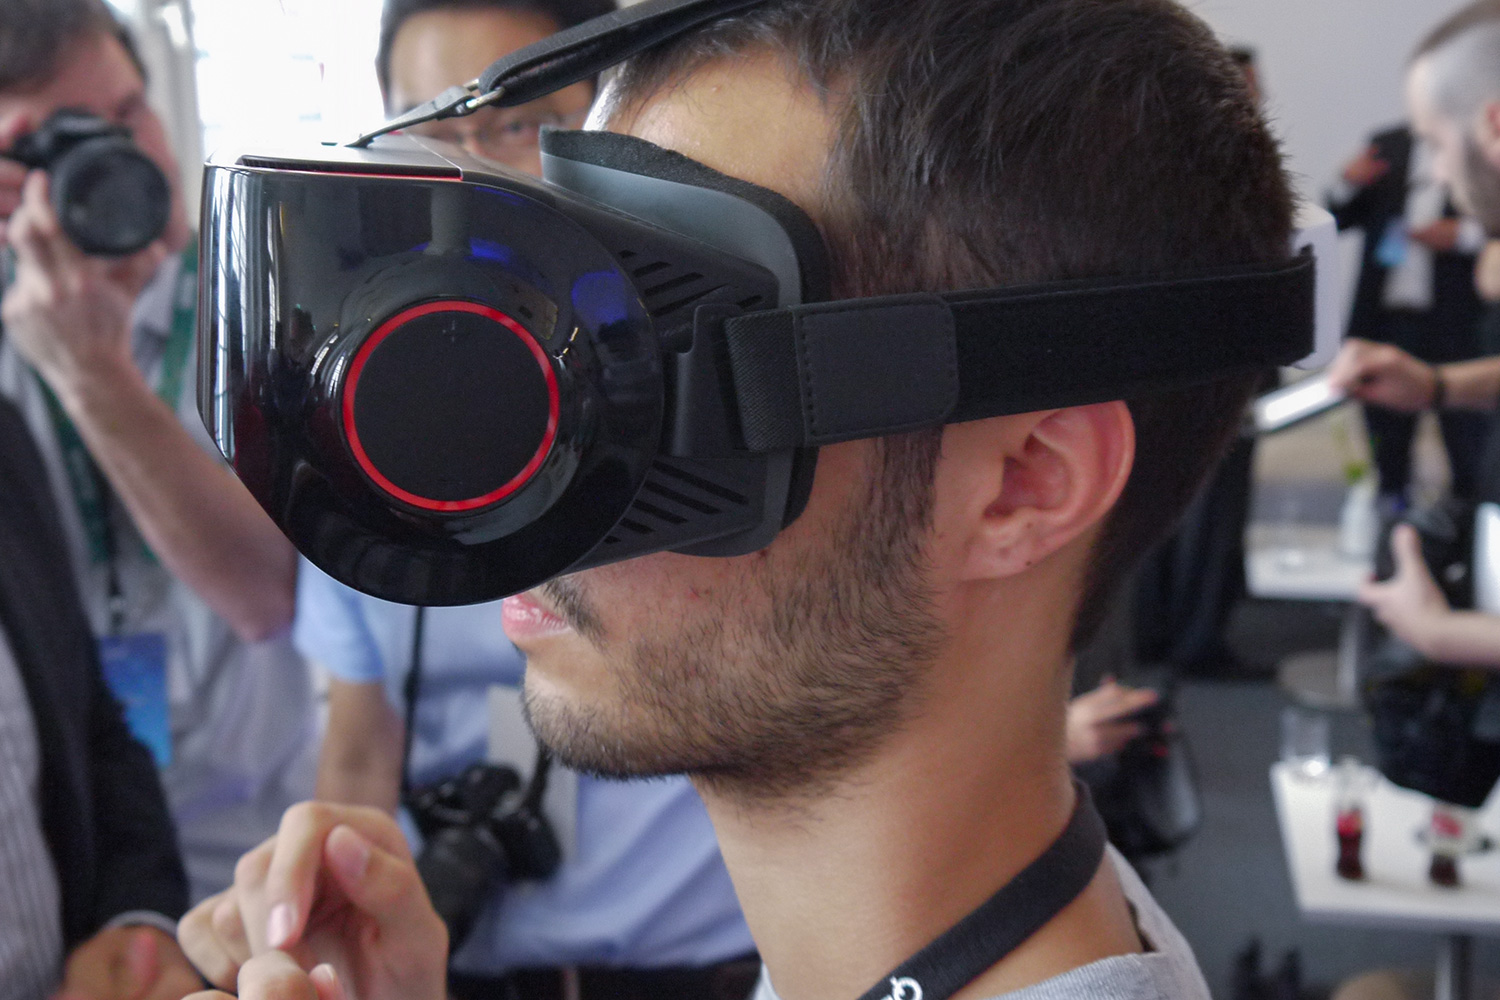 Qualcomm VR hands on